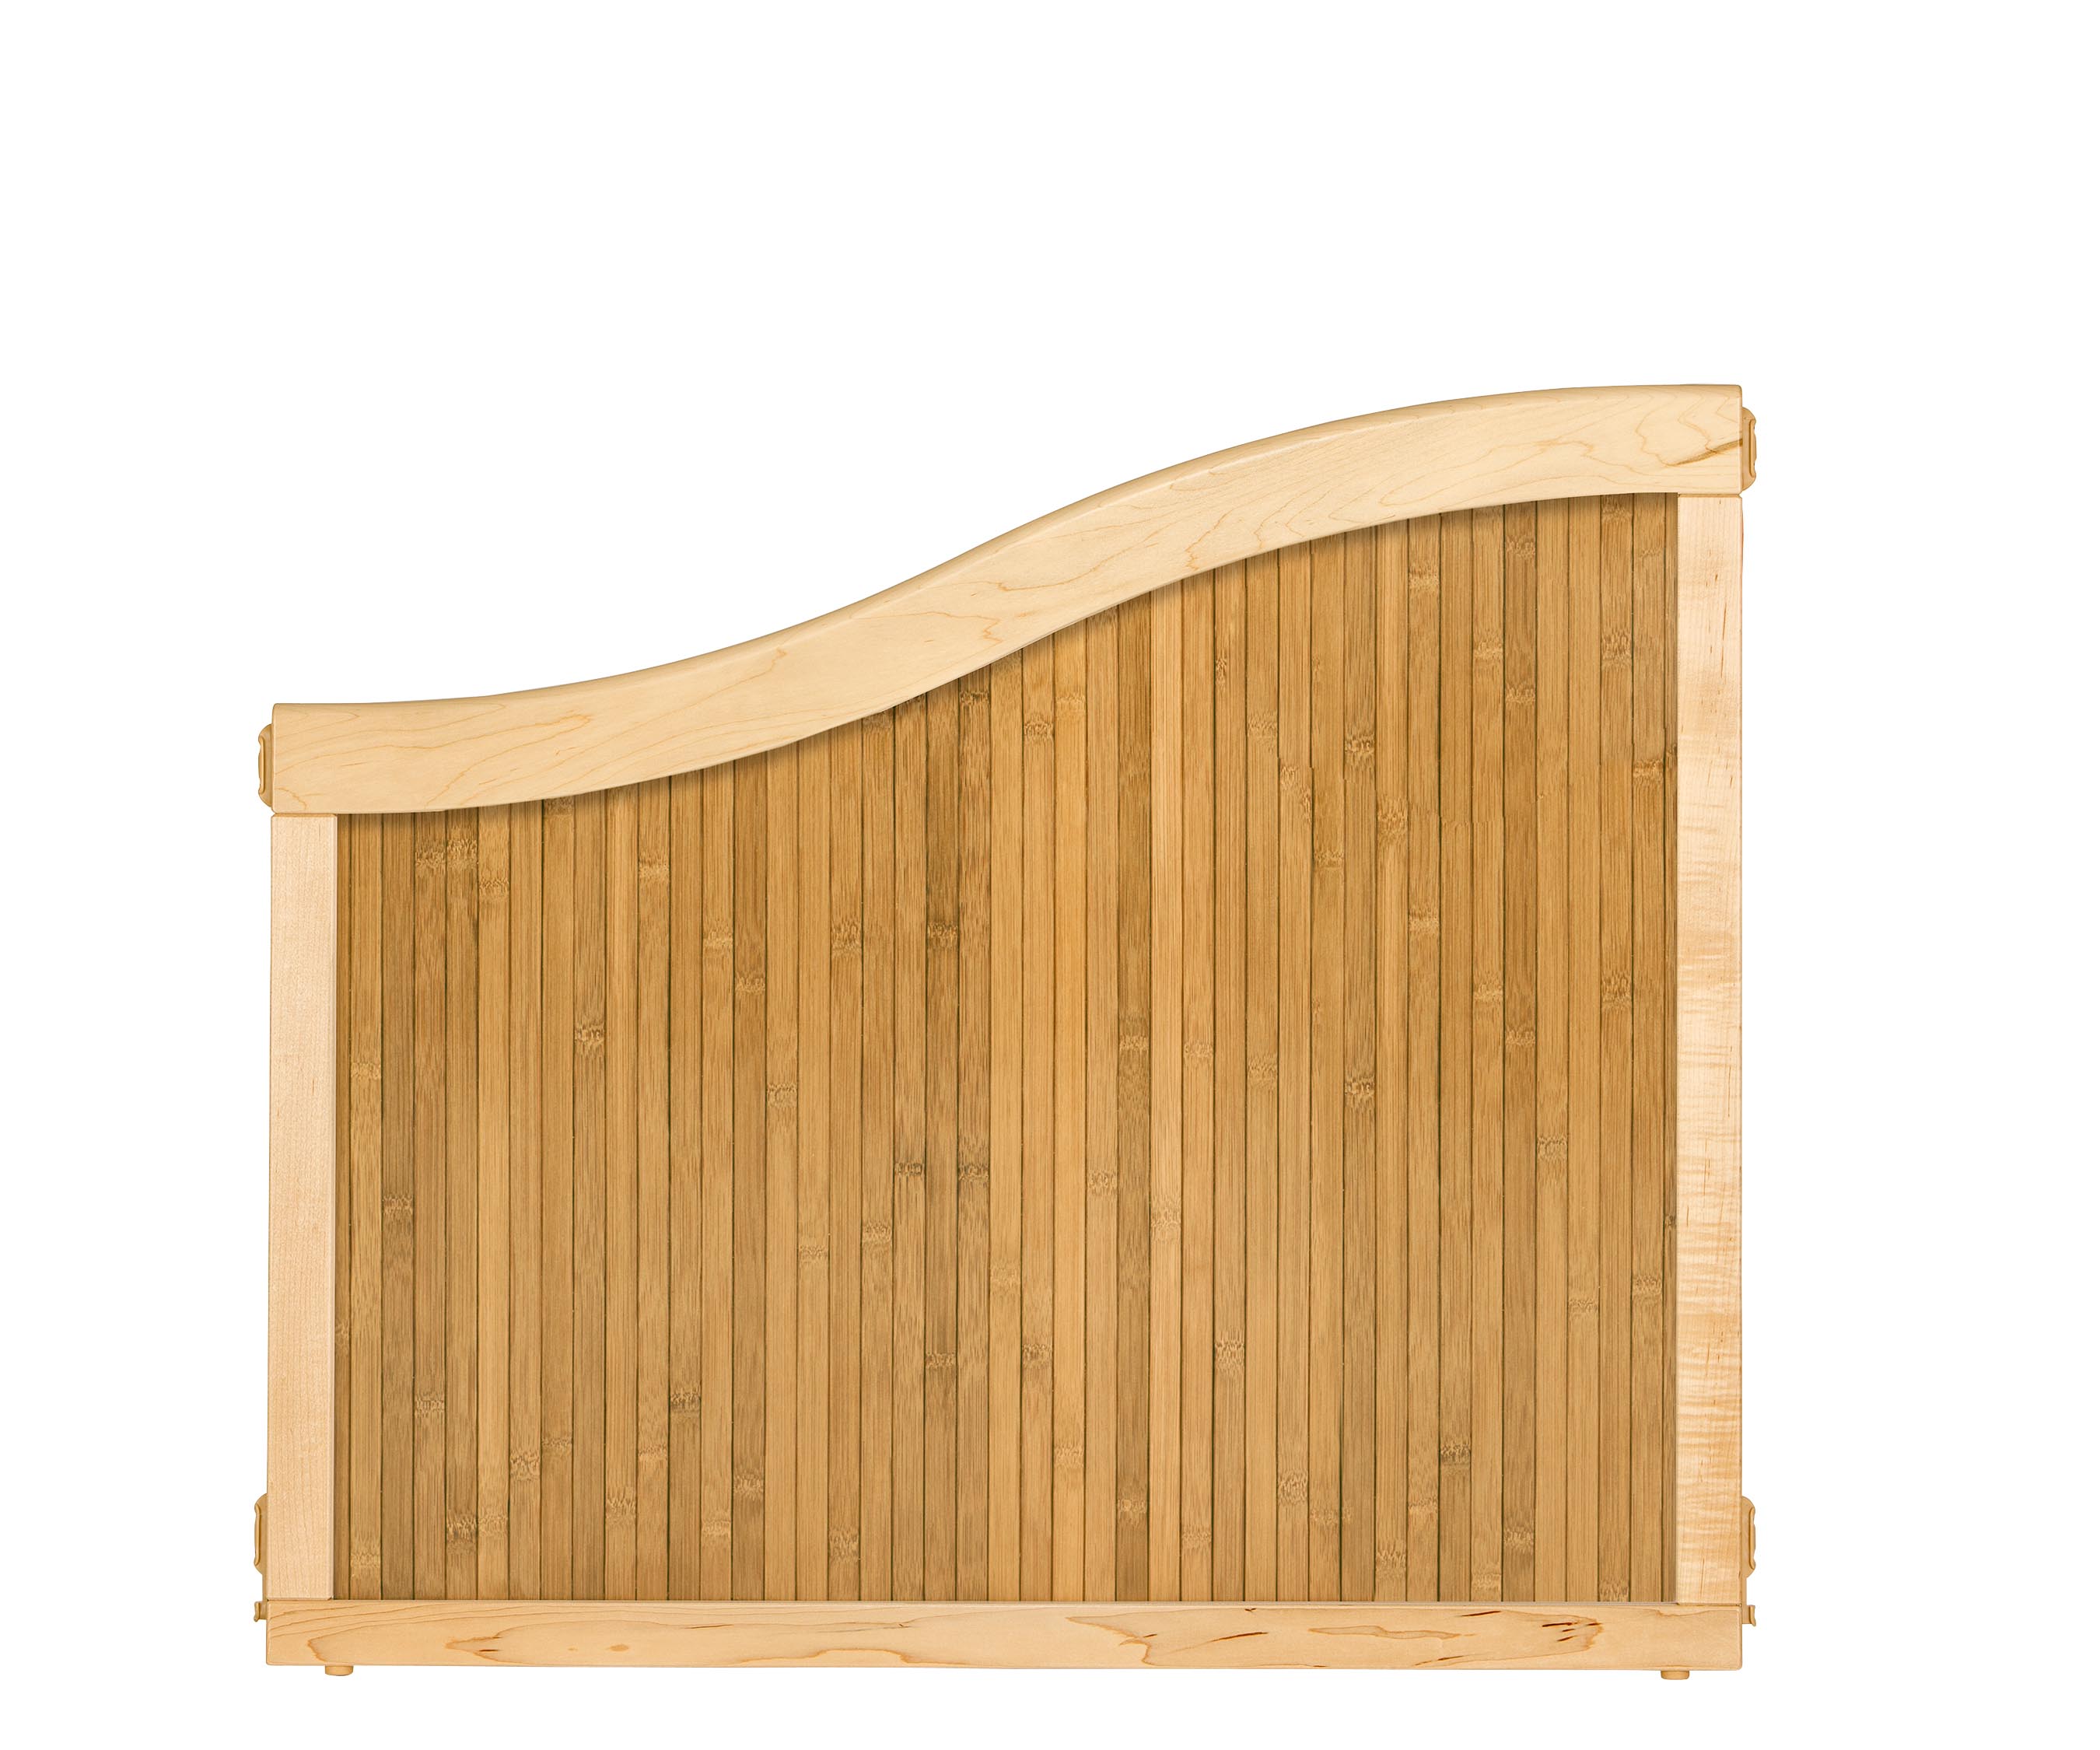 Bamboo wave panel, 61&ndash;81 cm